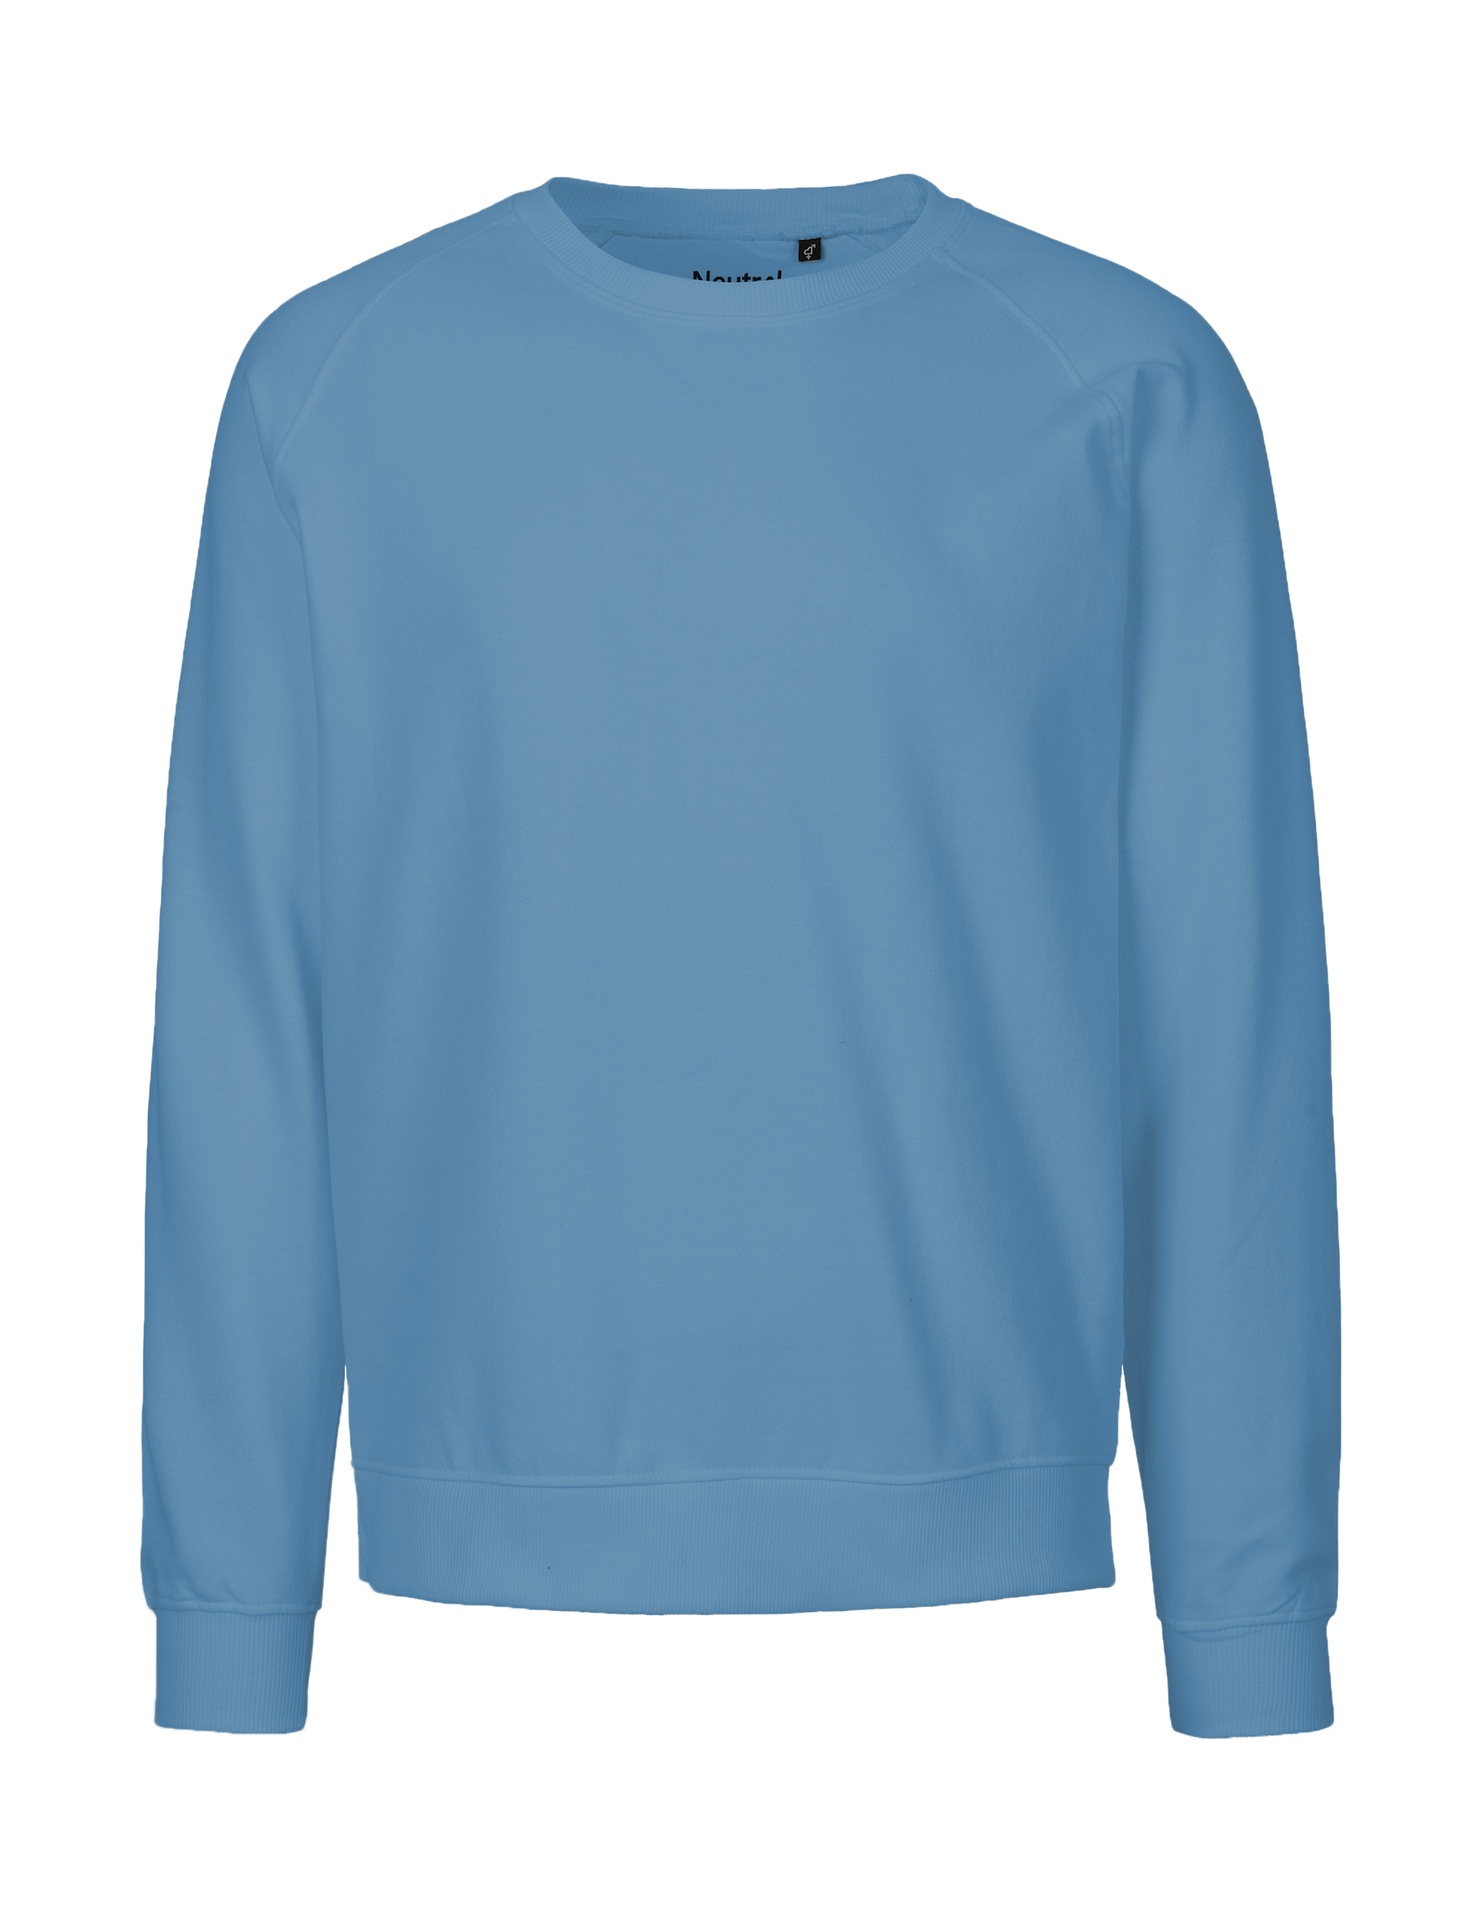 [PR/02838] Unisex Sweatshirt (Dusty Indigo 41, 3XL)